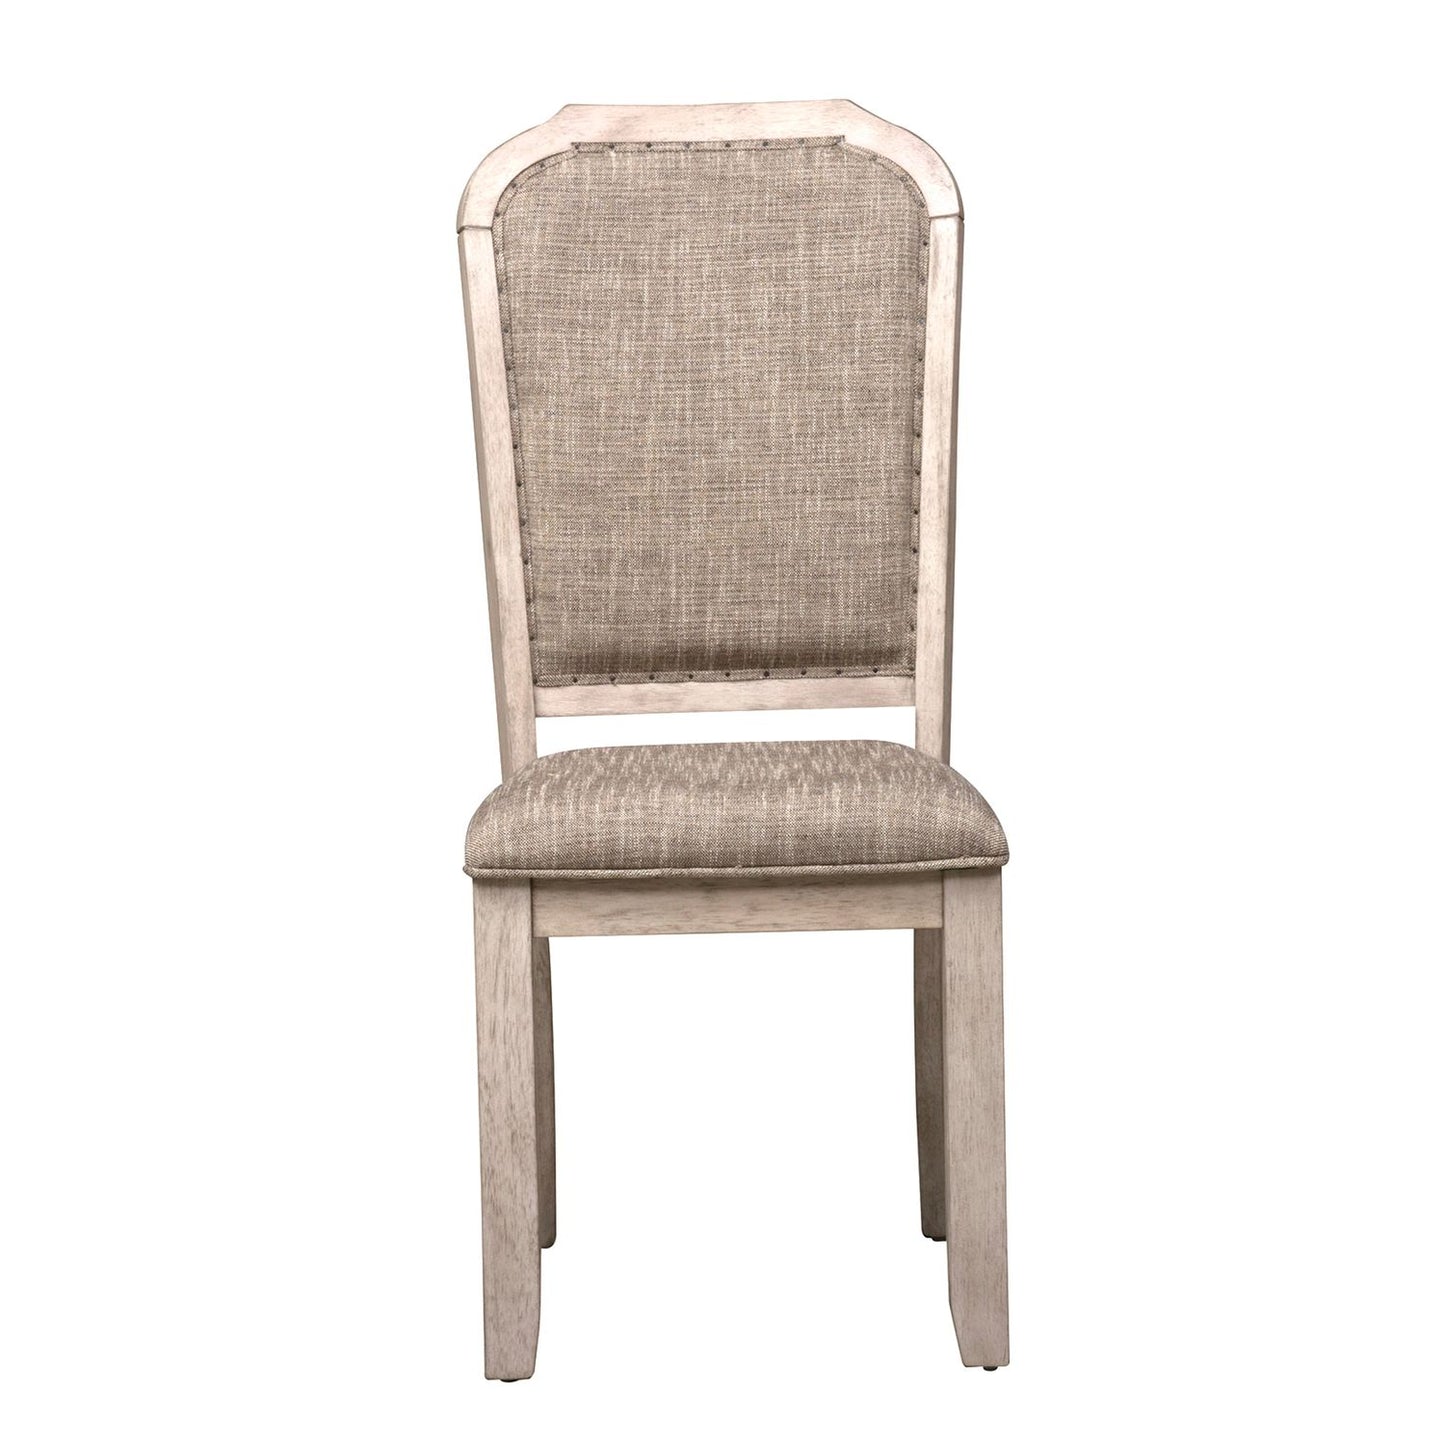 Willowrun - Uph Side Chair (RTA)